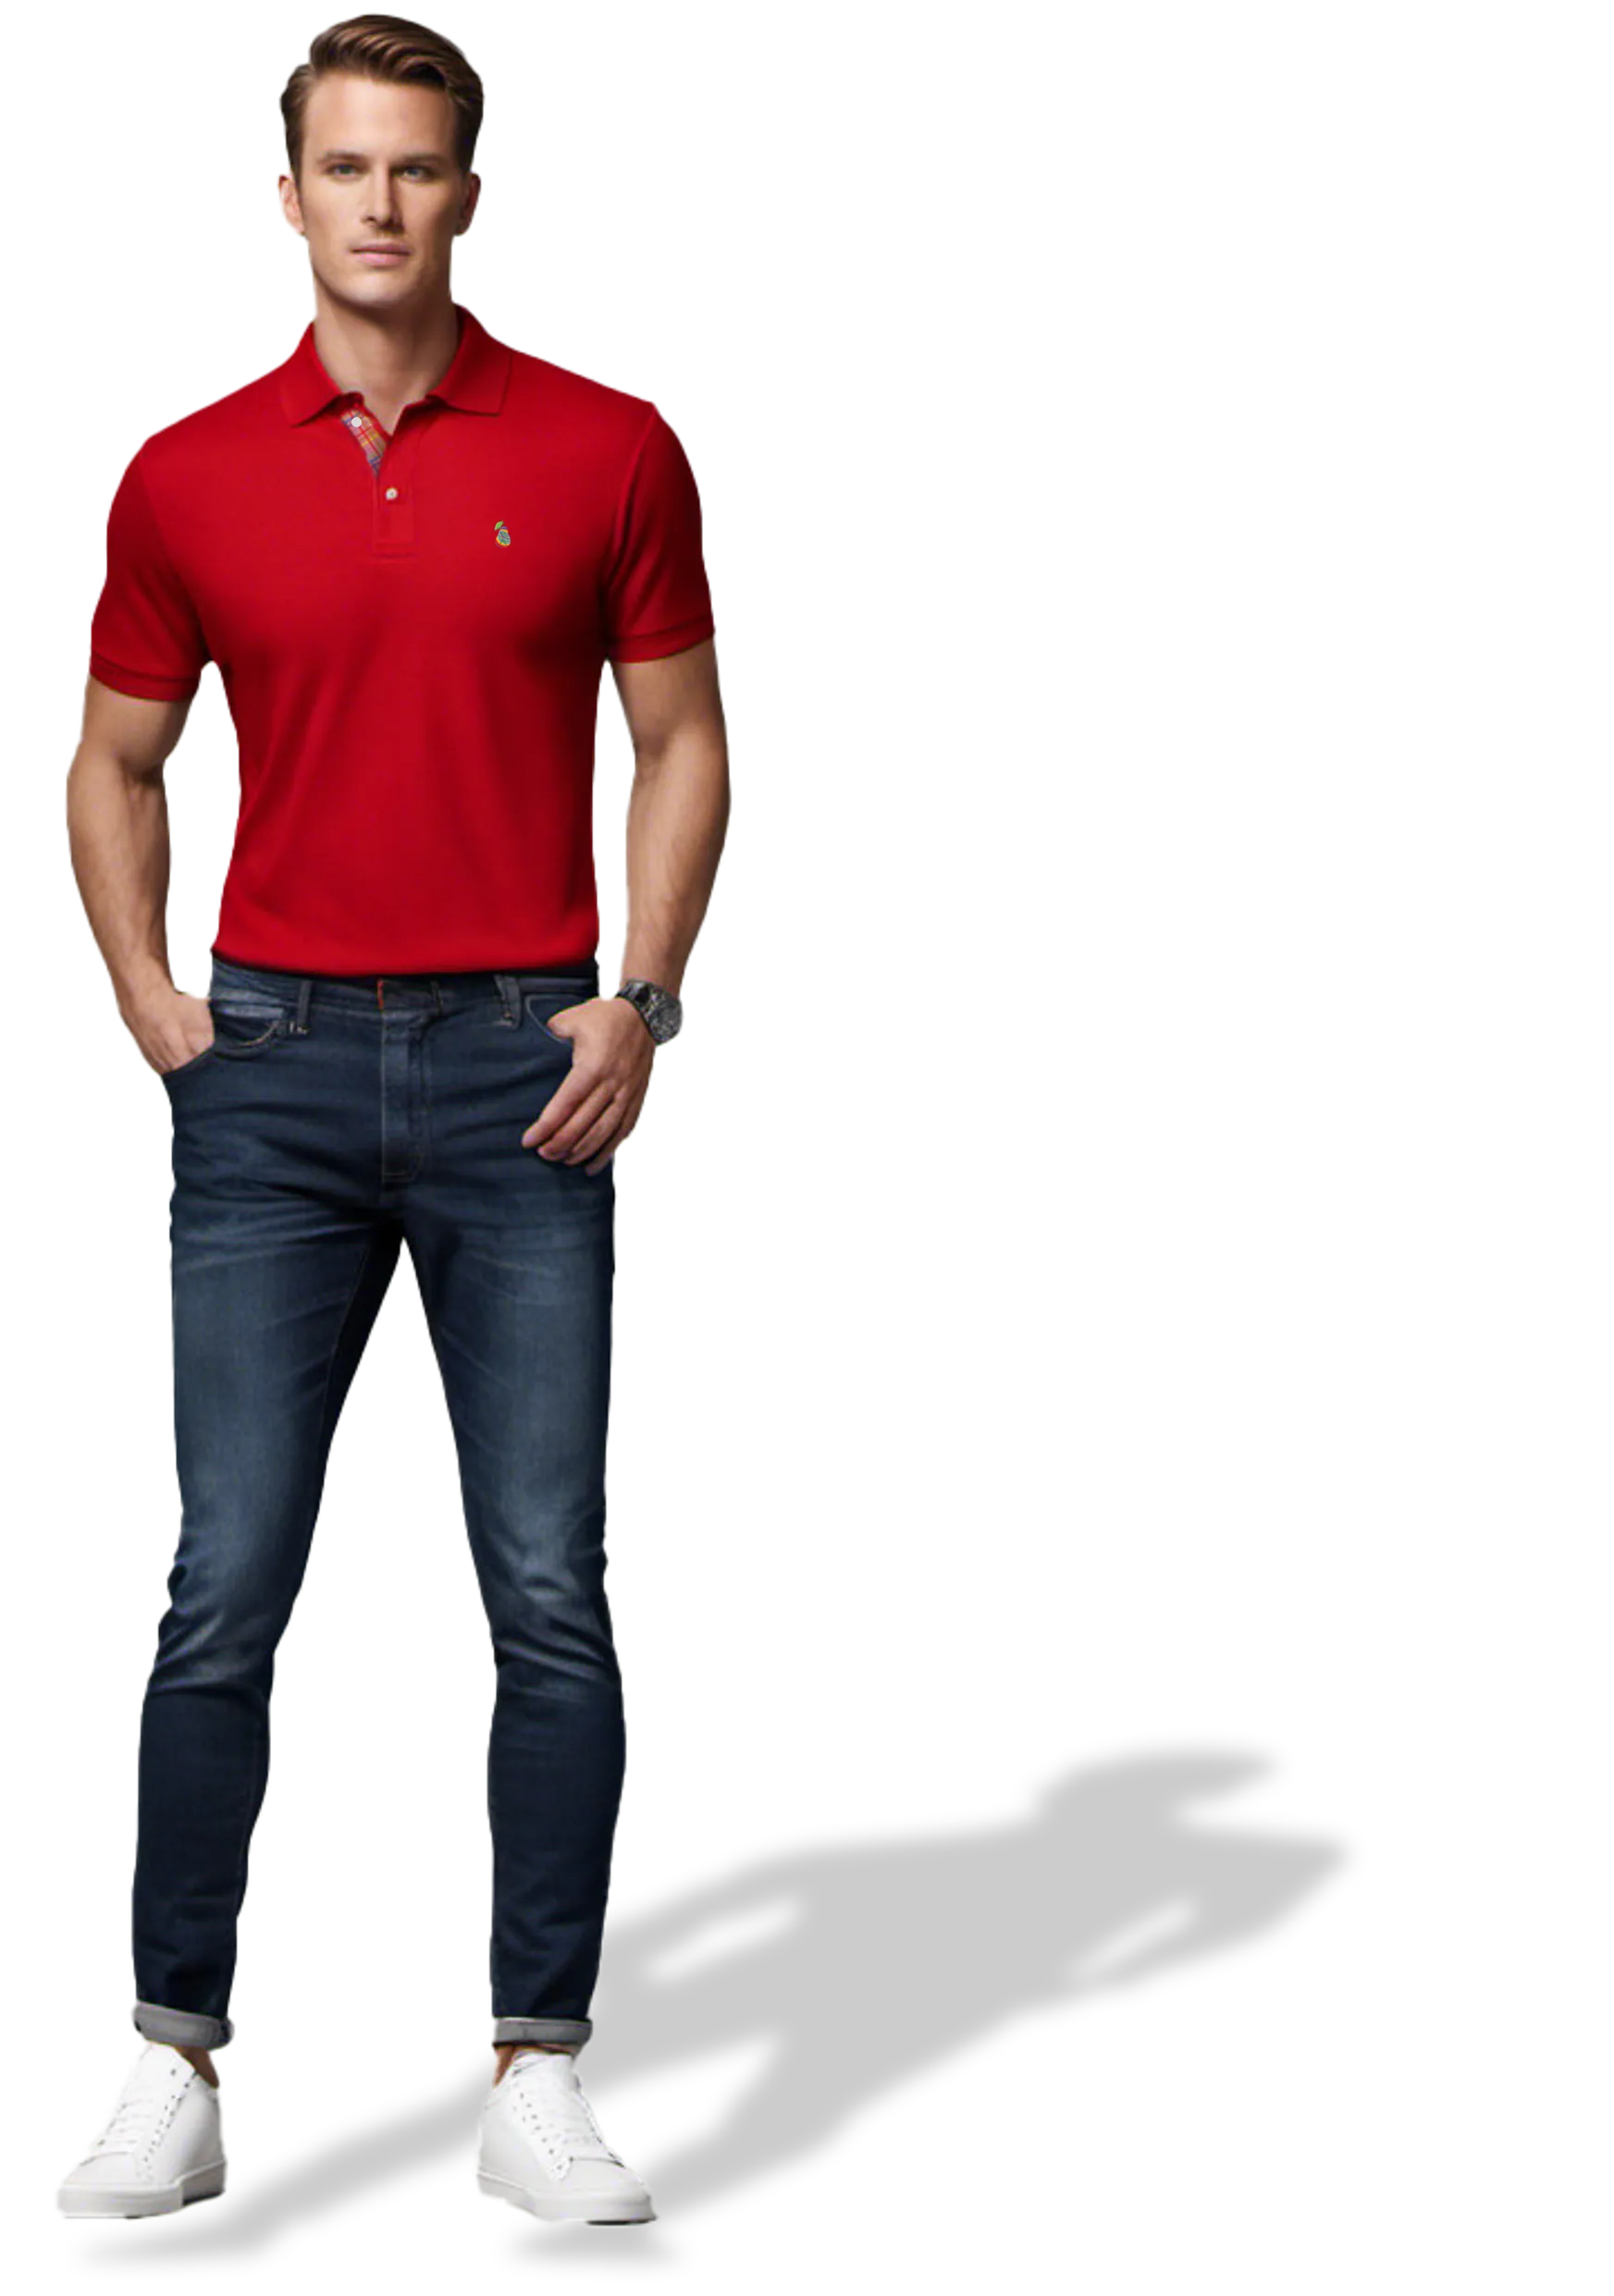 Tom Pearman Coral Red Polo shirt